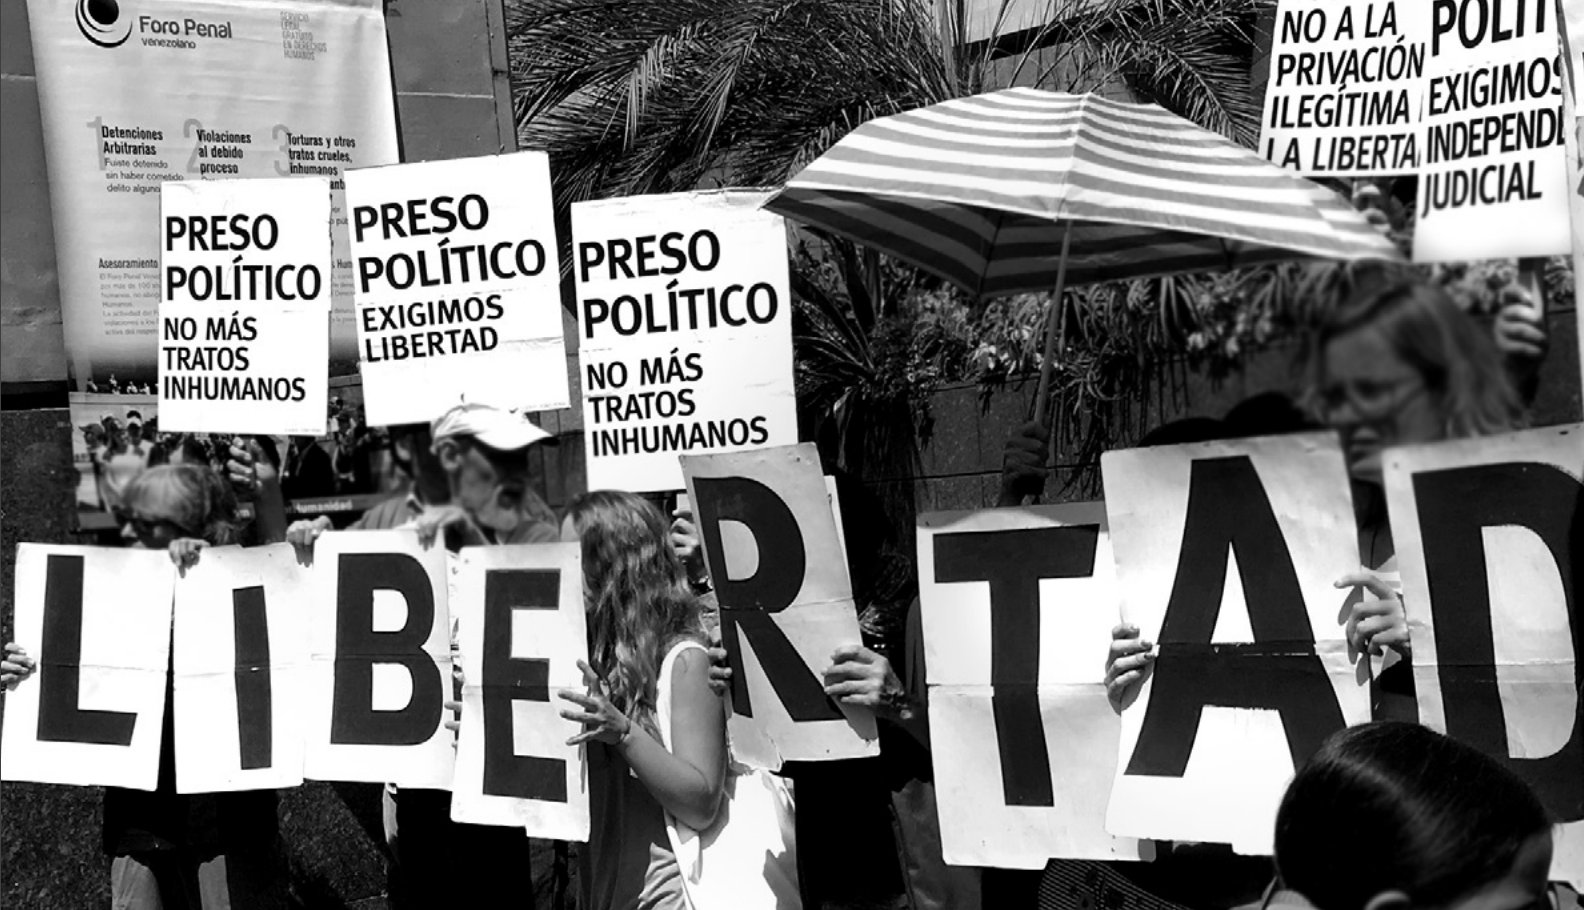 Venezuelan activists demand abortion decriminalization and legalization -  EFE Noticias